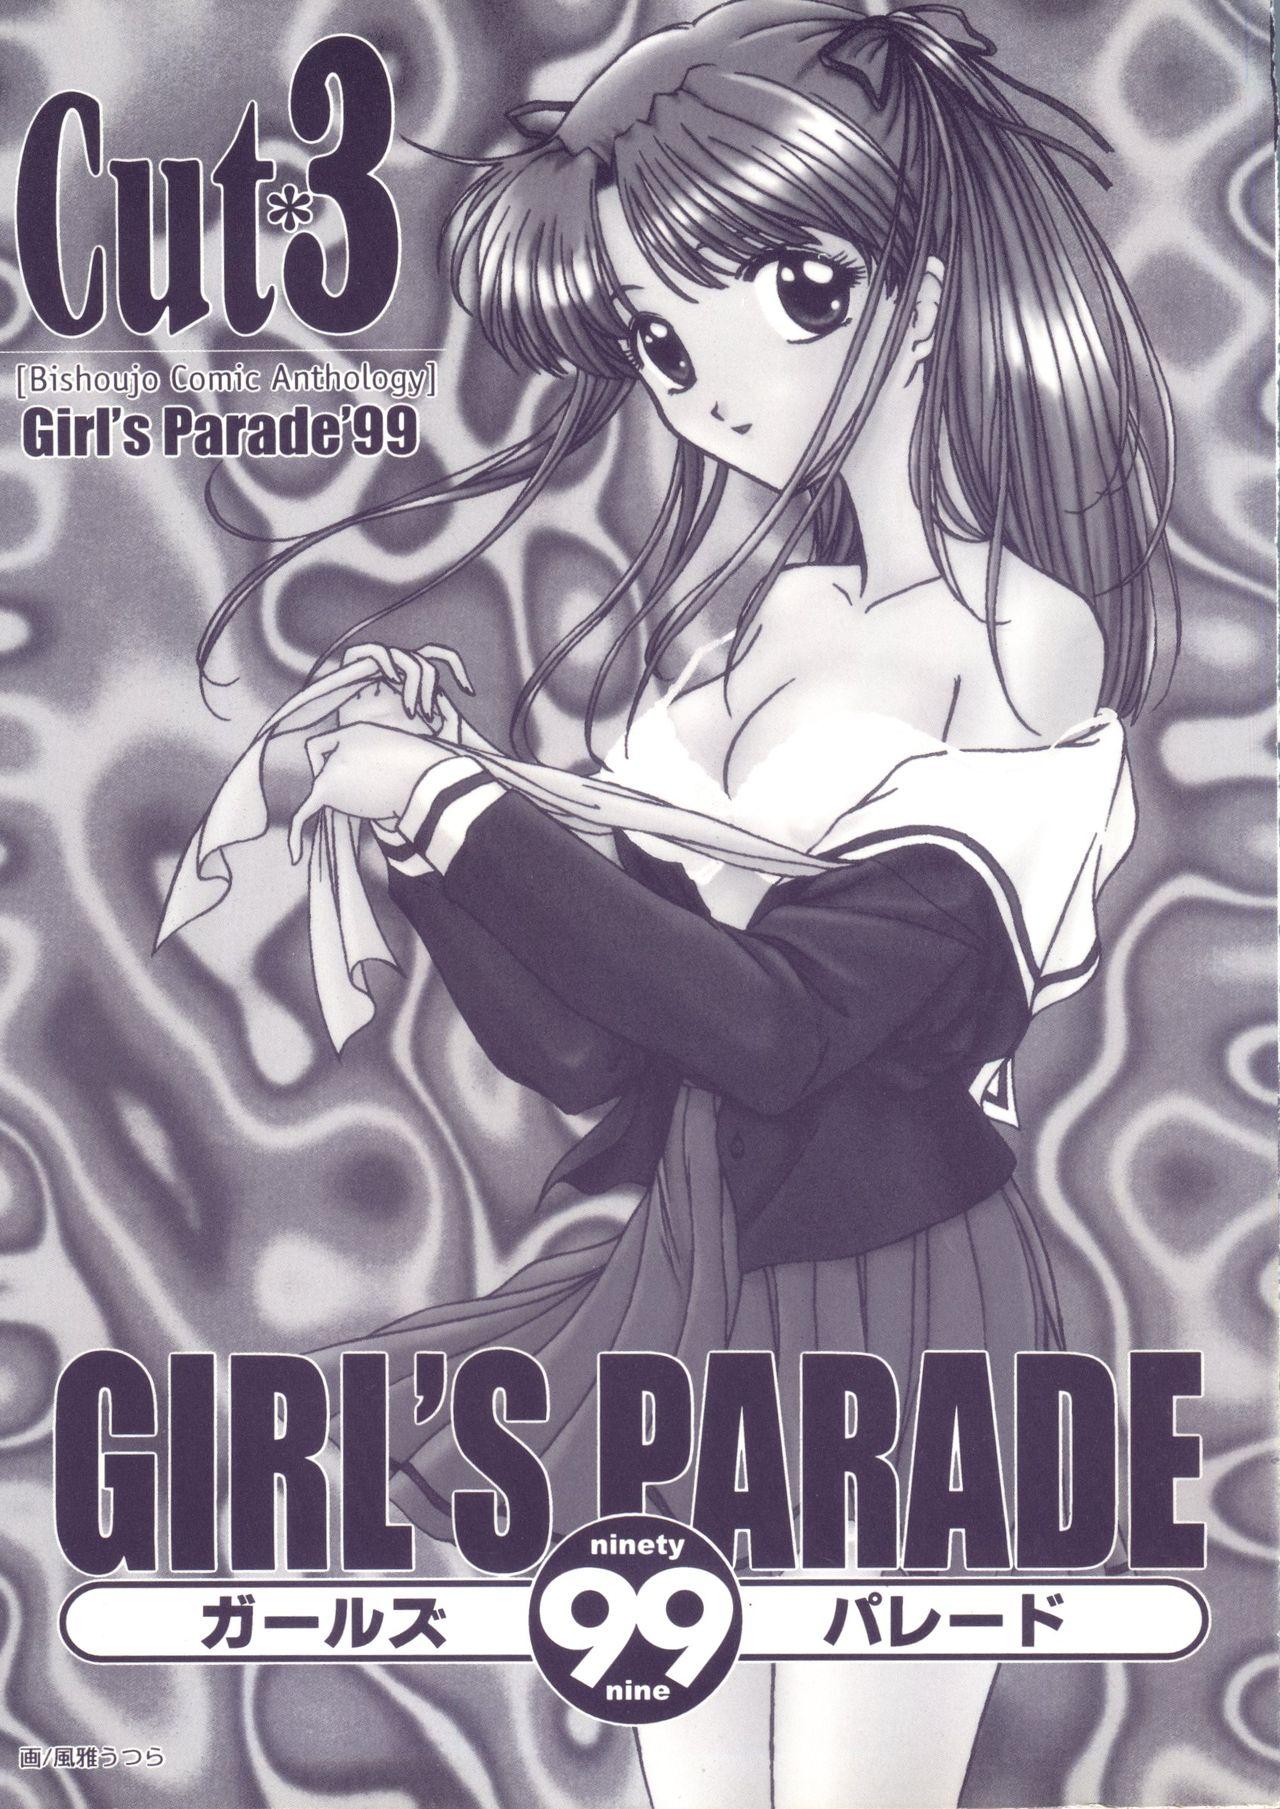 Girl's Parade 99 Cut 3 1